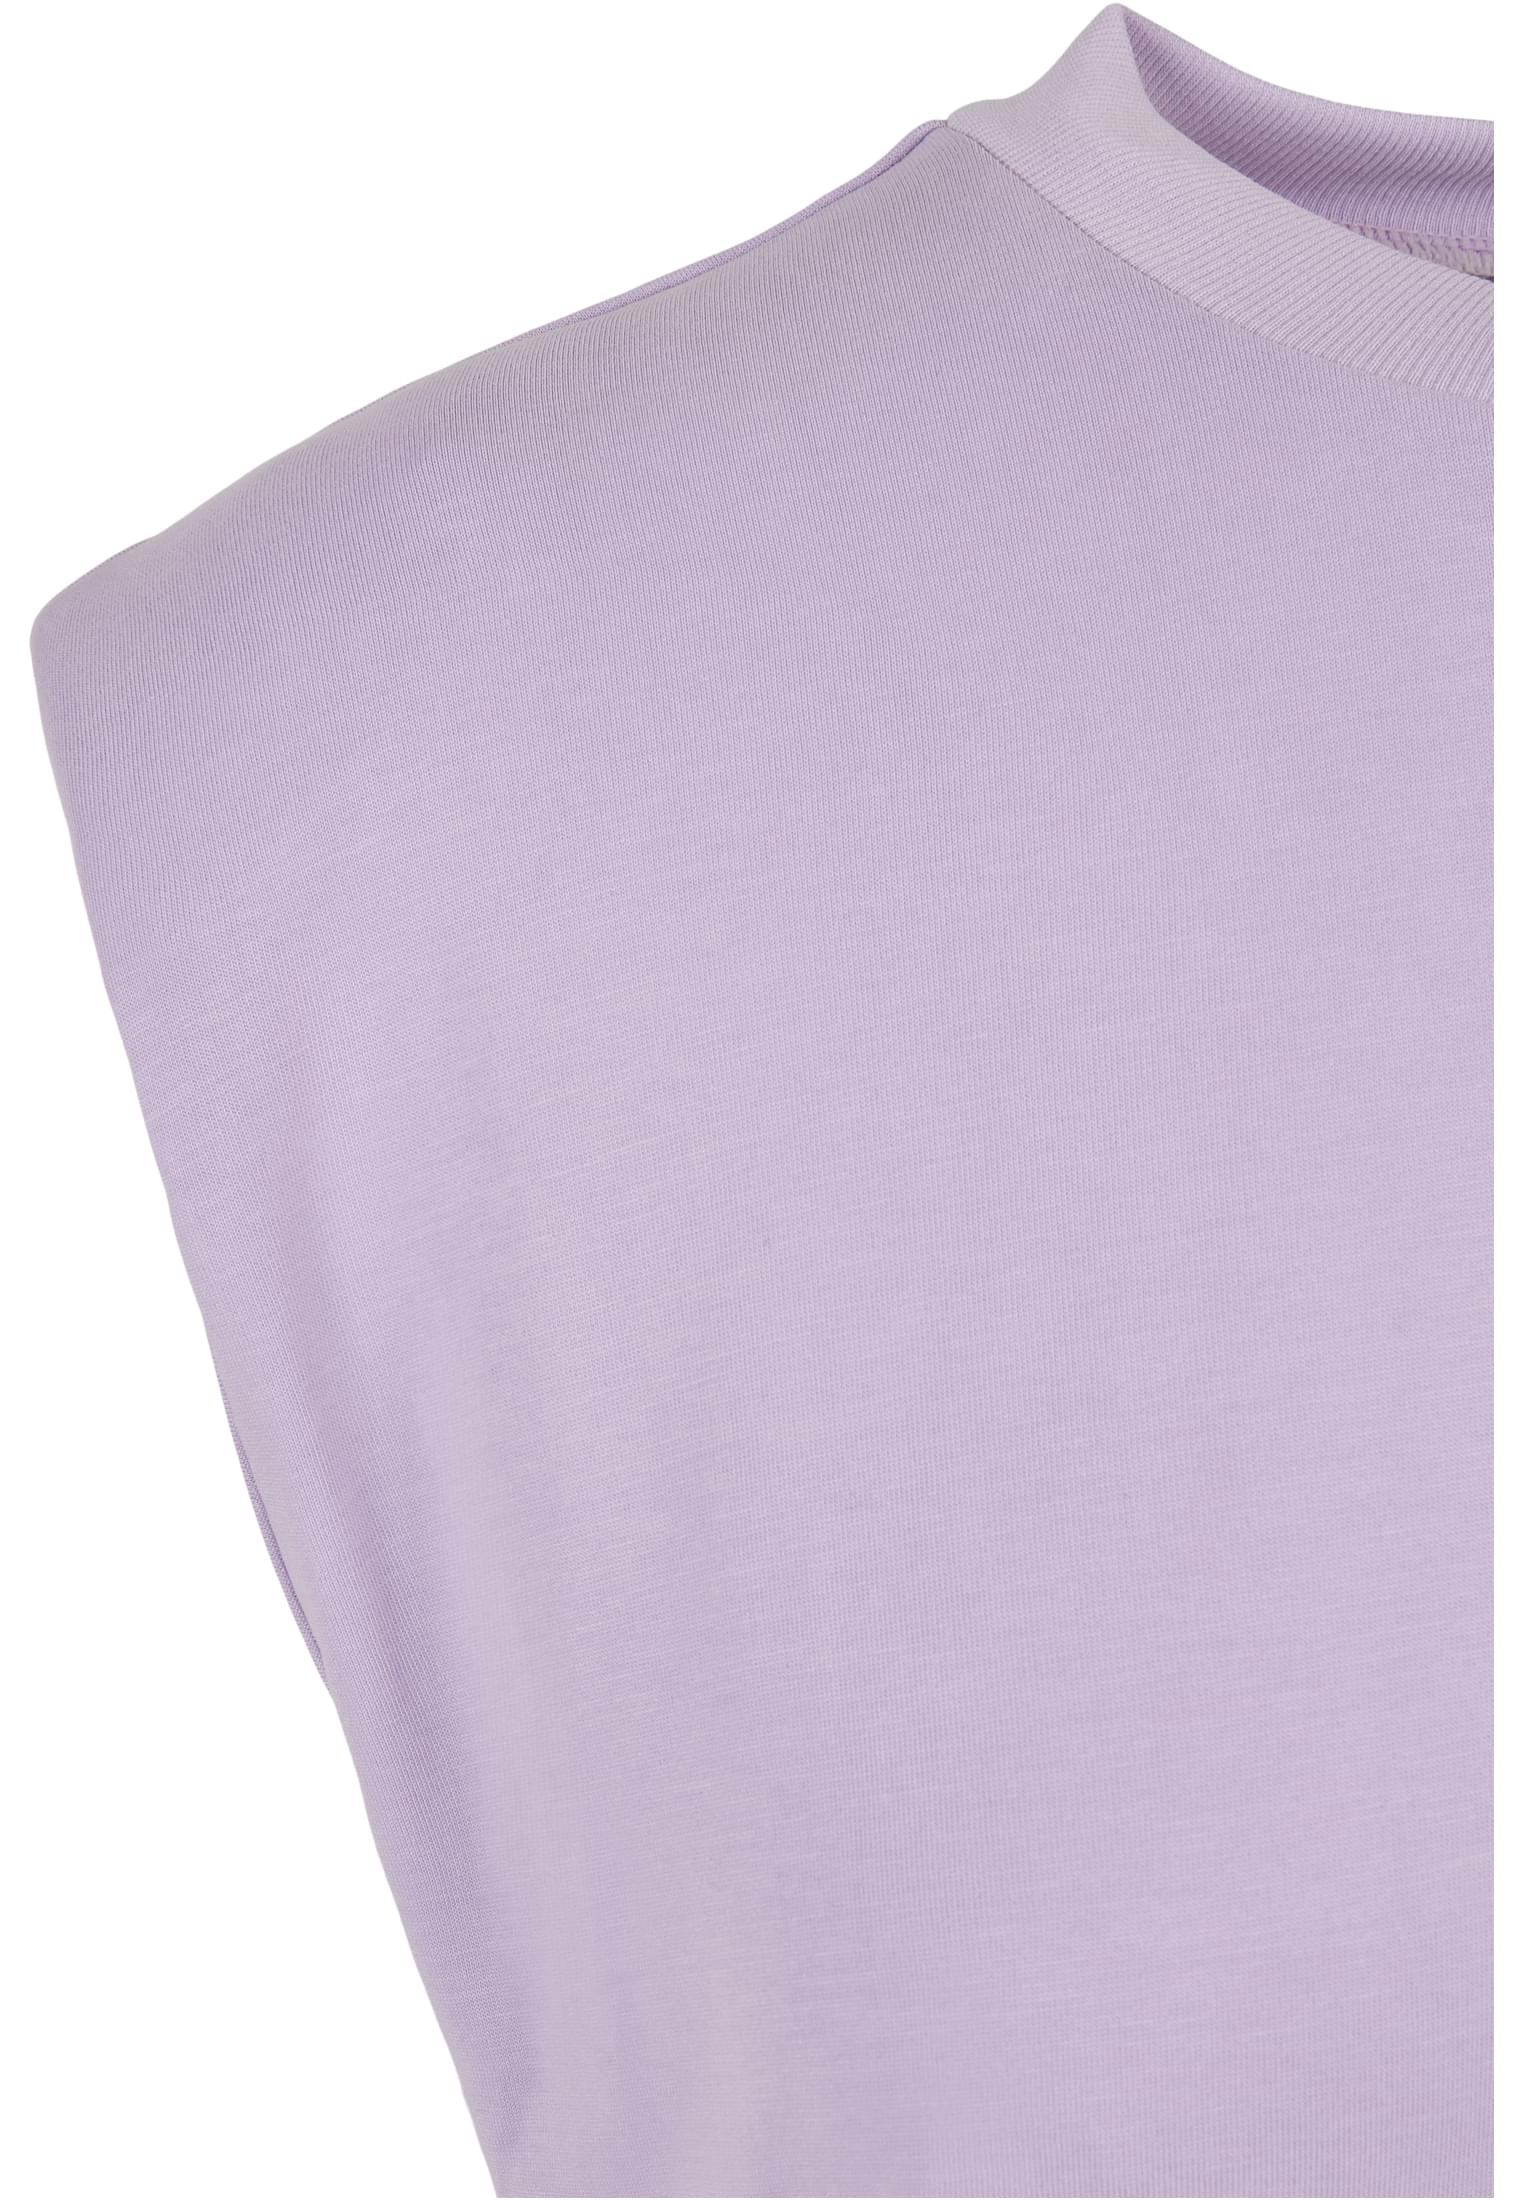 Frauen Ladies Modal Padded Shoulder Tank in Farbe lilac